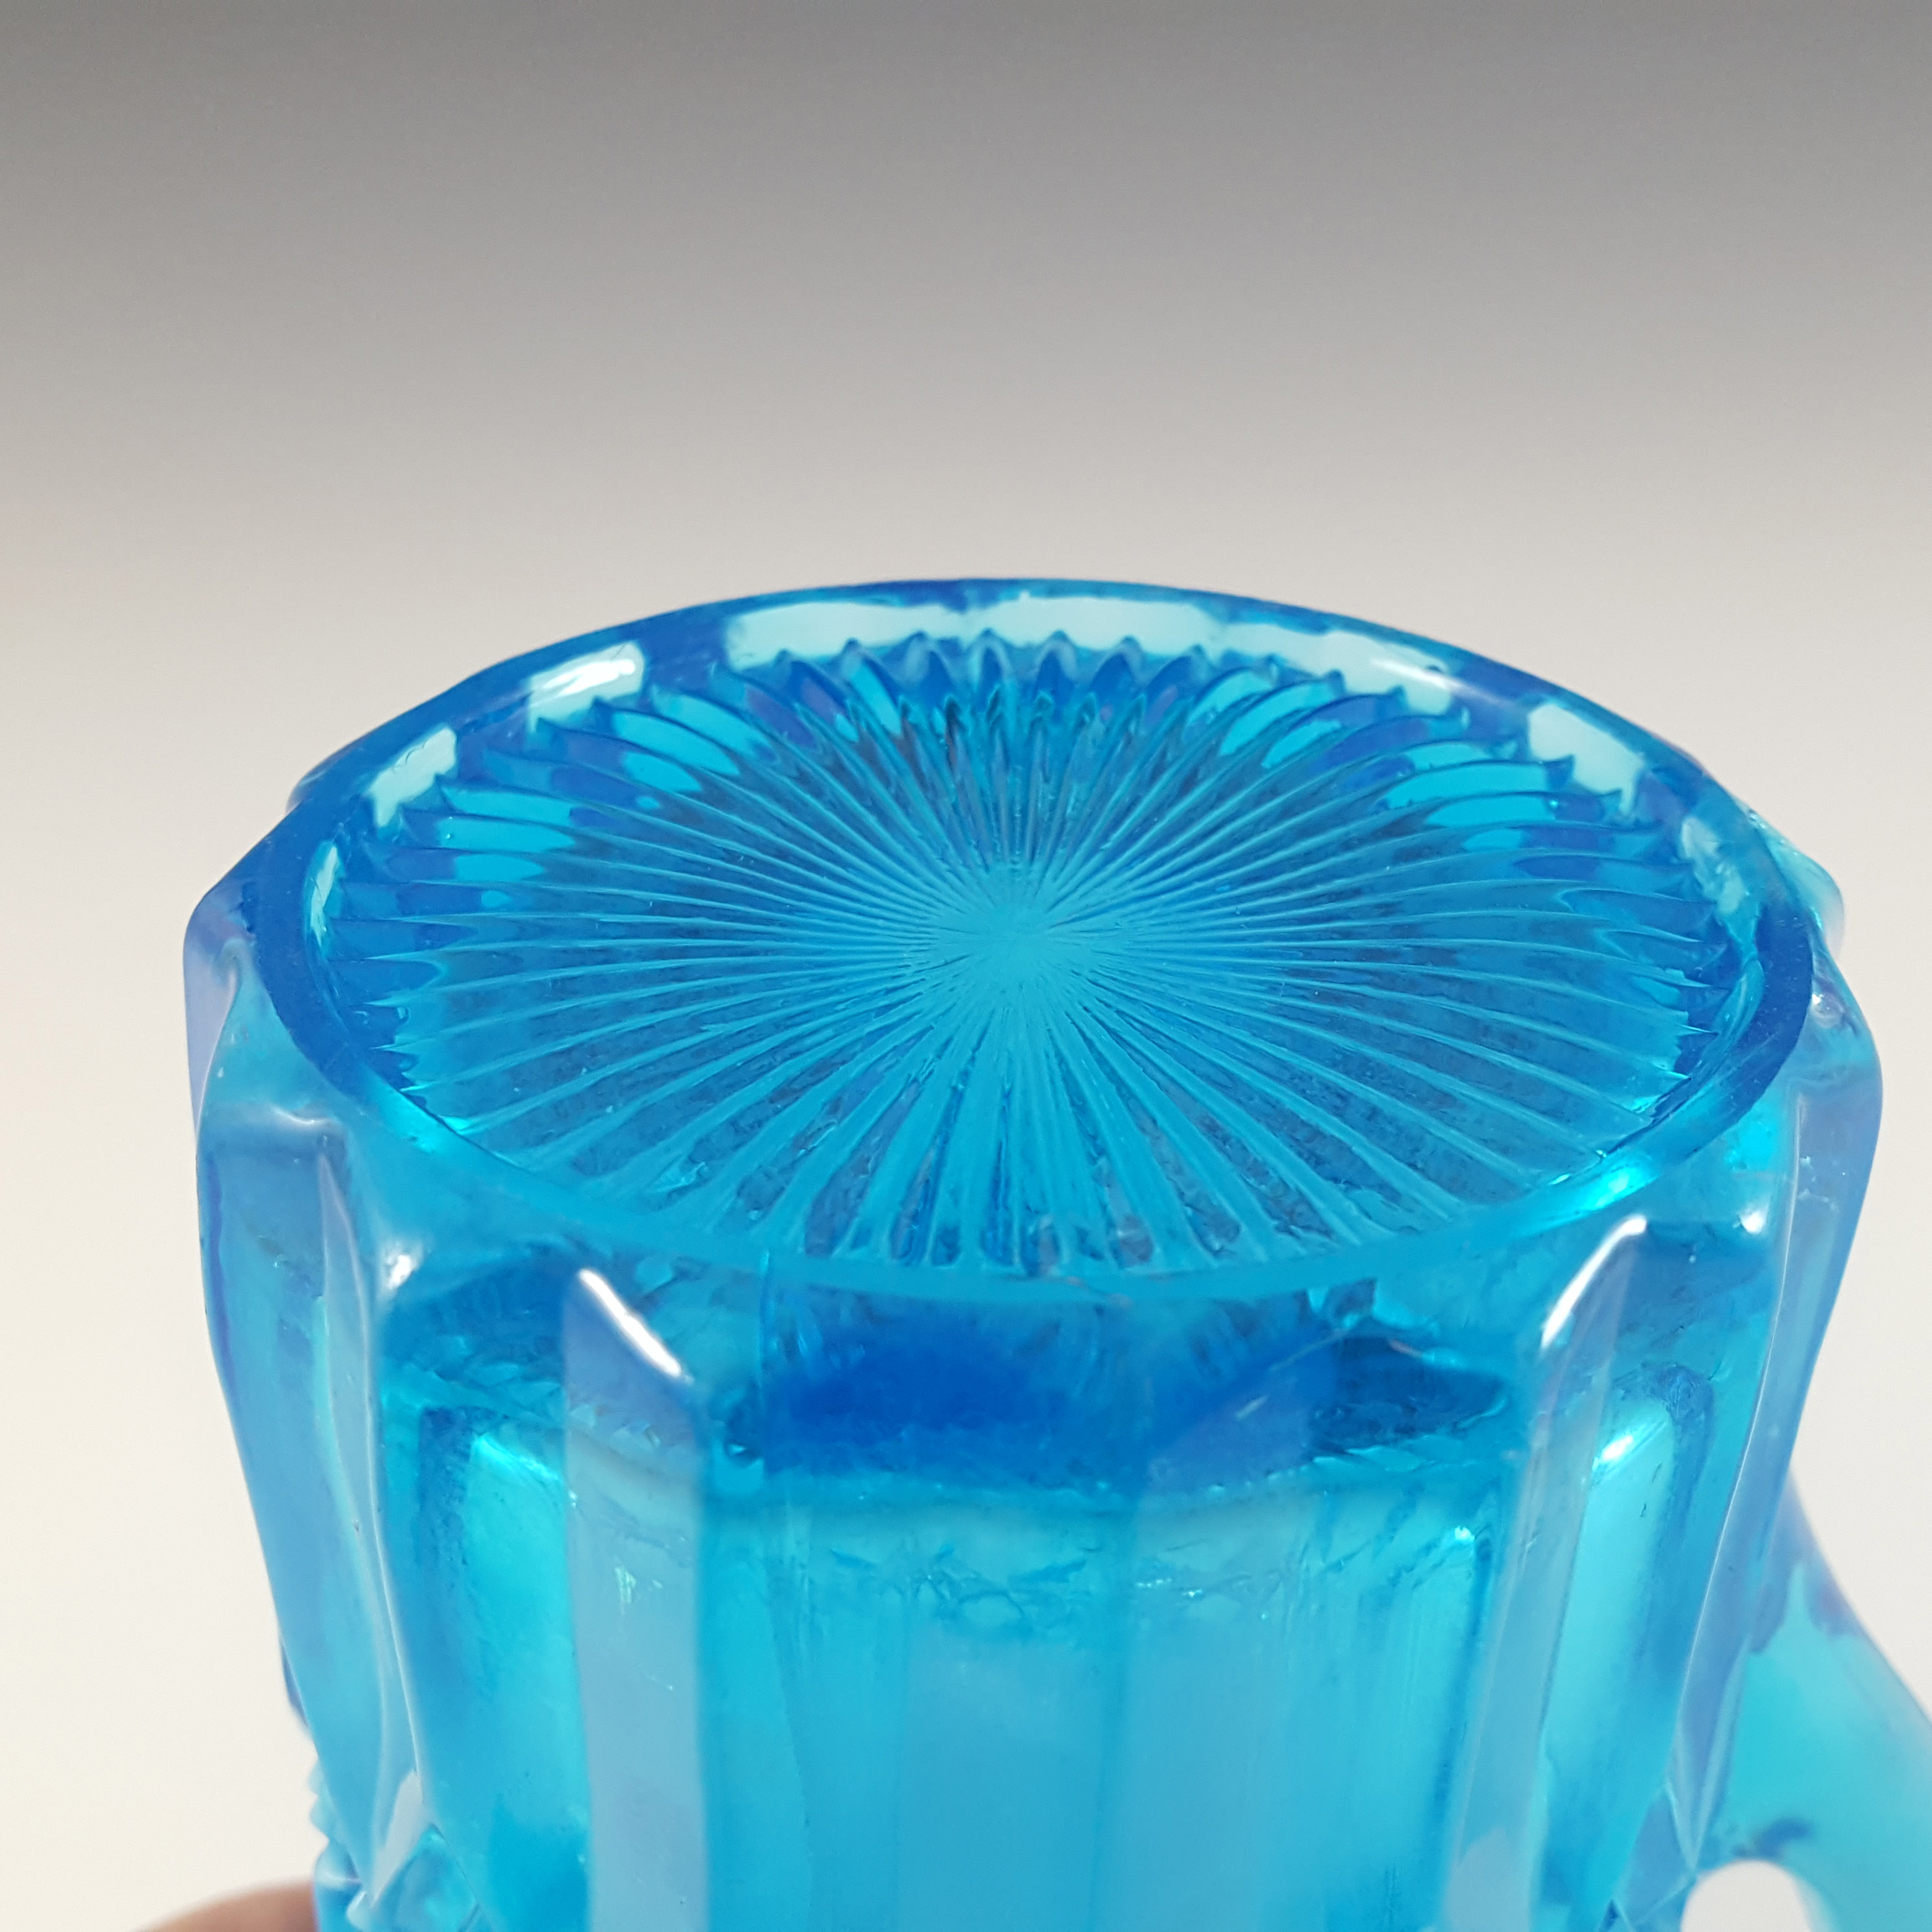 Davidson Blue Pearline Glass 'Prince William' Jug - Click Image to Close